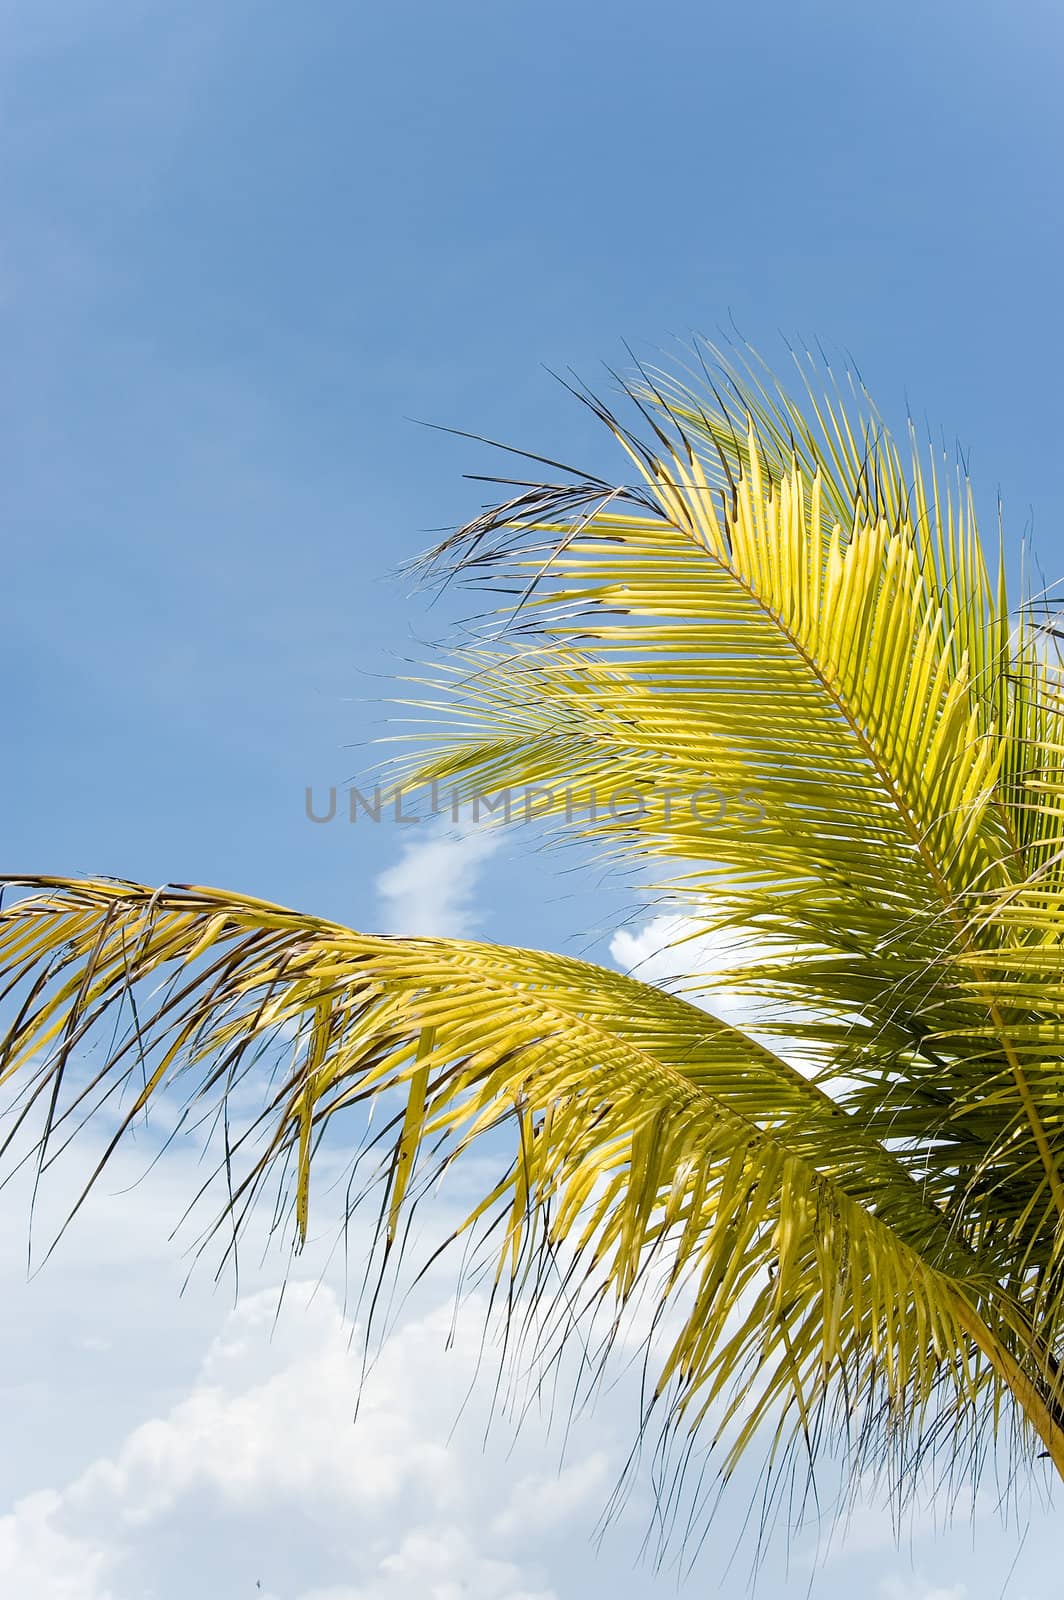 bright palm leaves